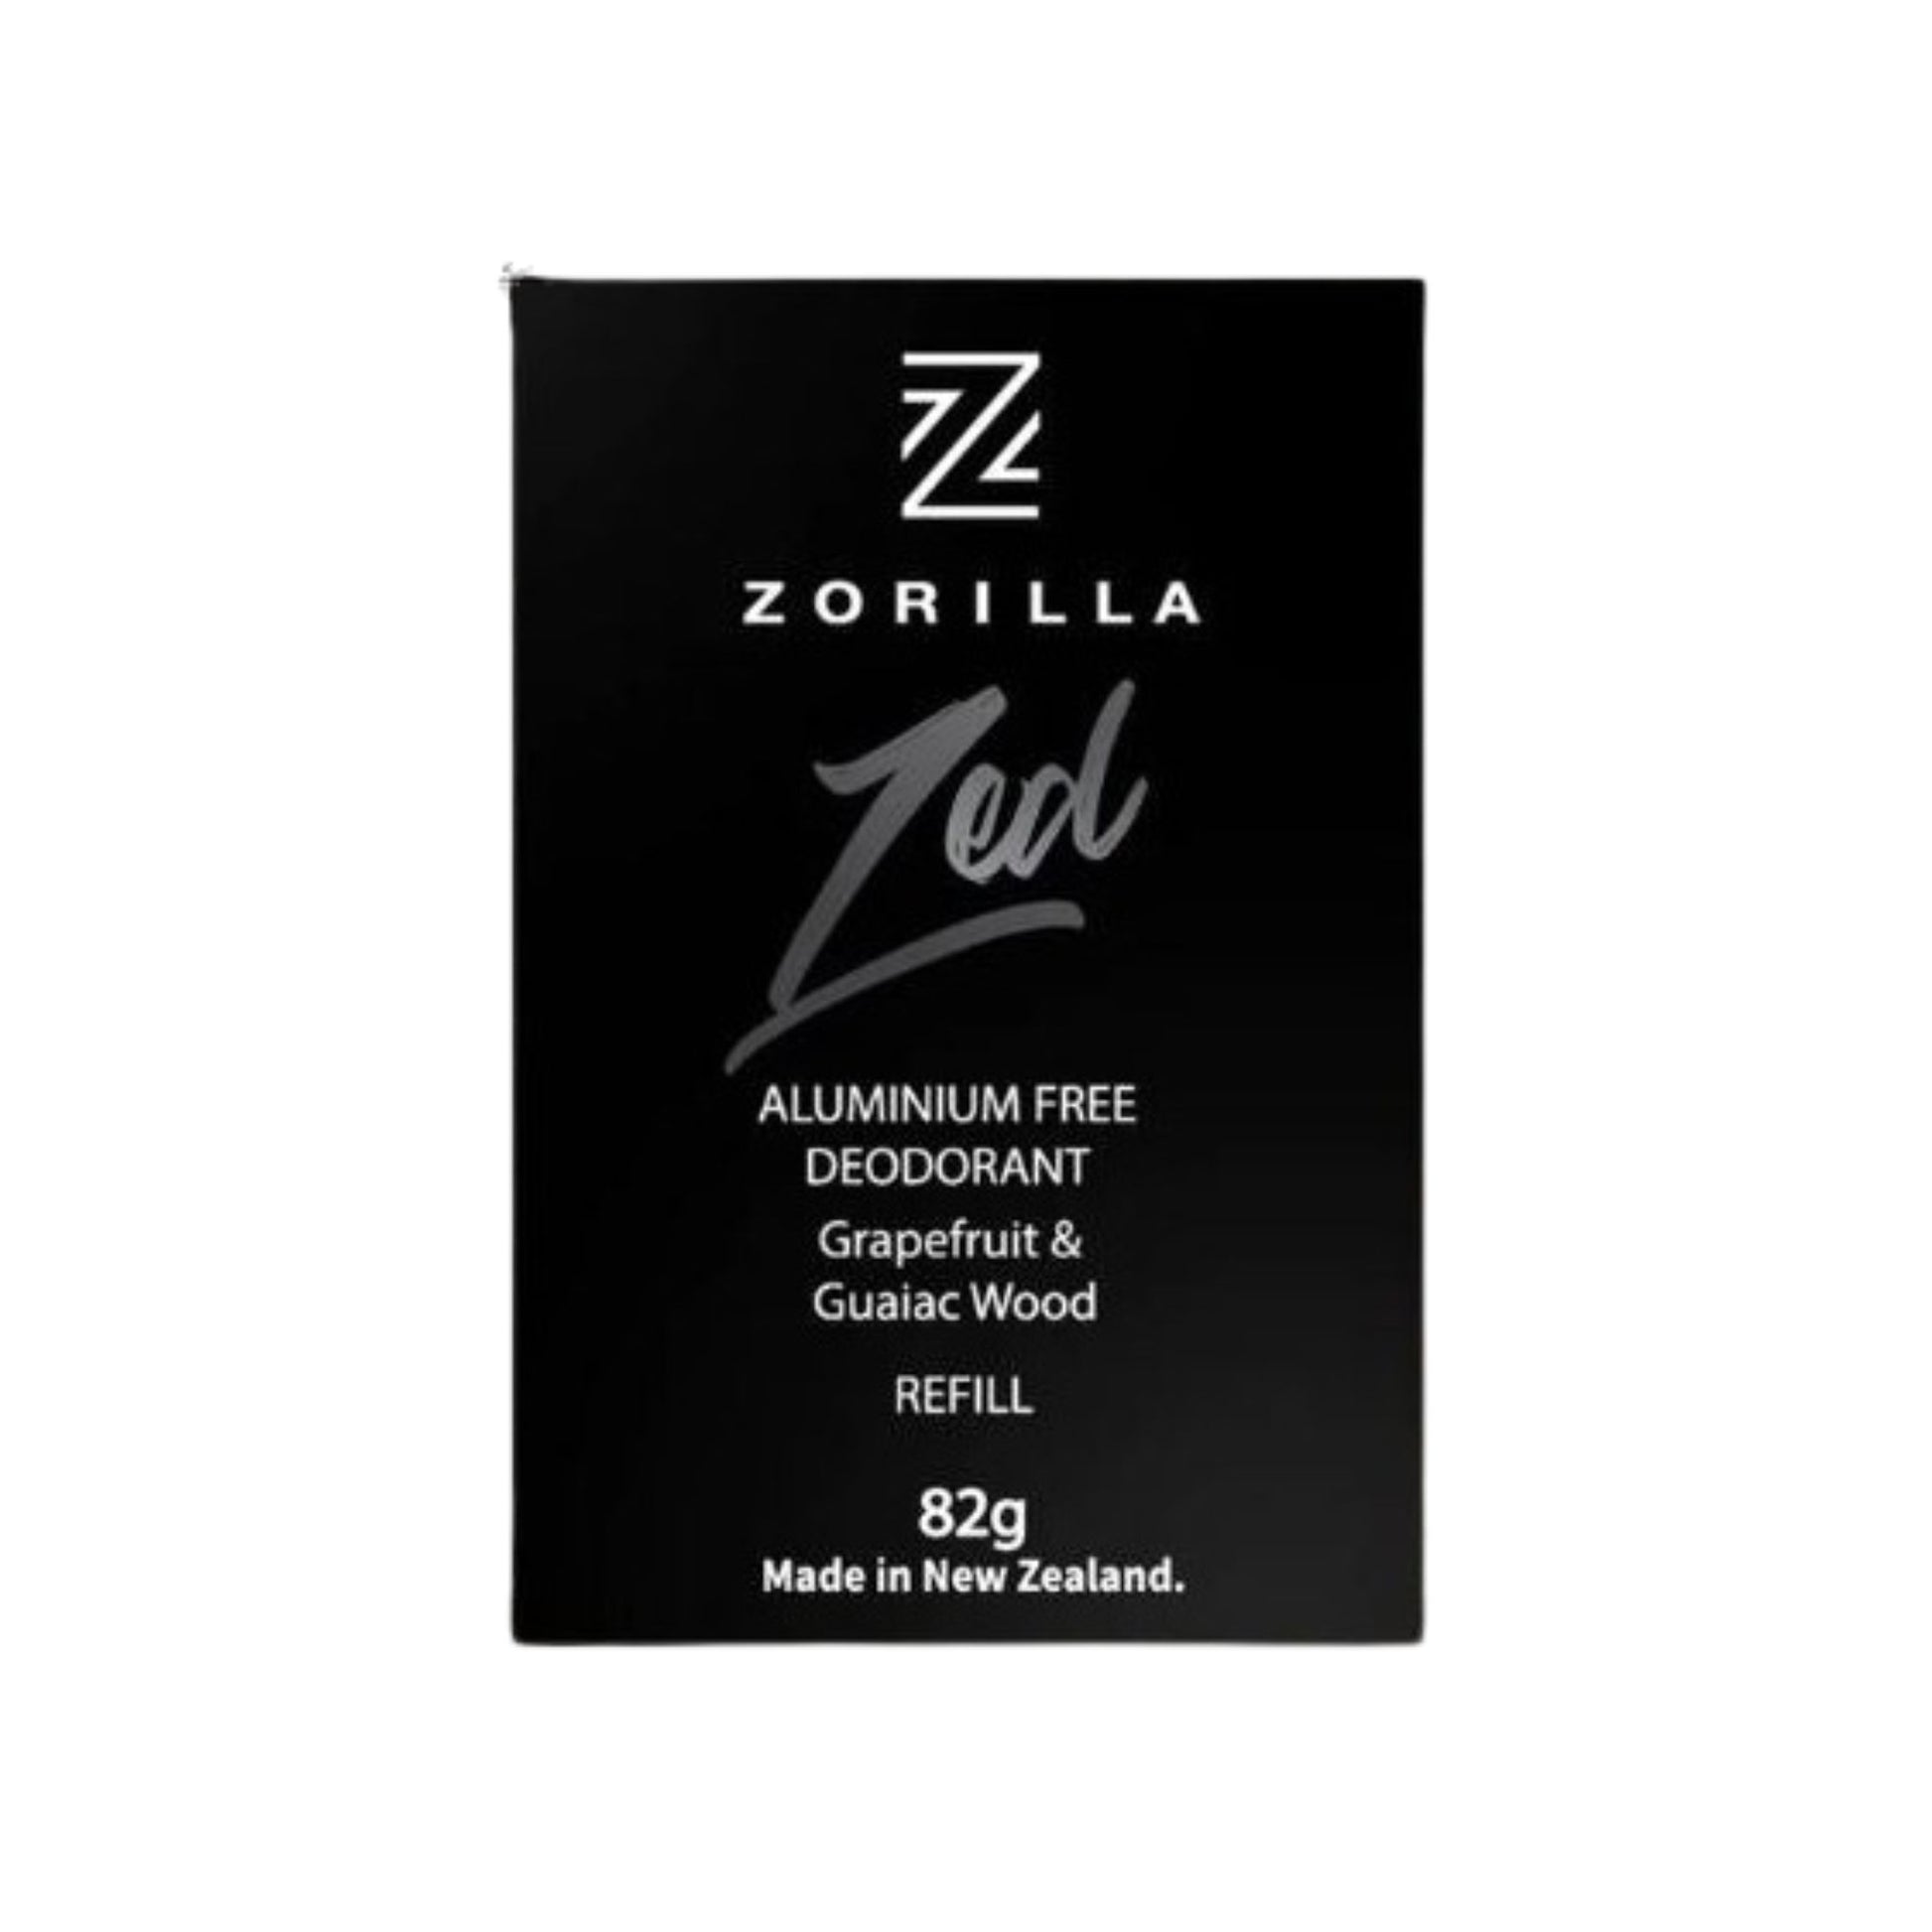 Zorilla Zed Aluminium free deodorant refill. Fragrance of Grapefruit and Guaiac Wood